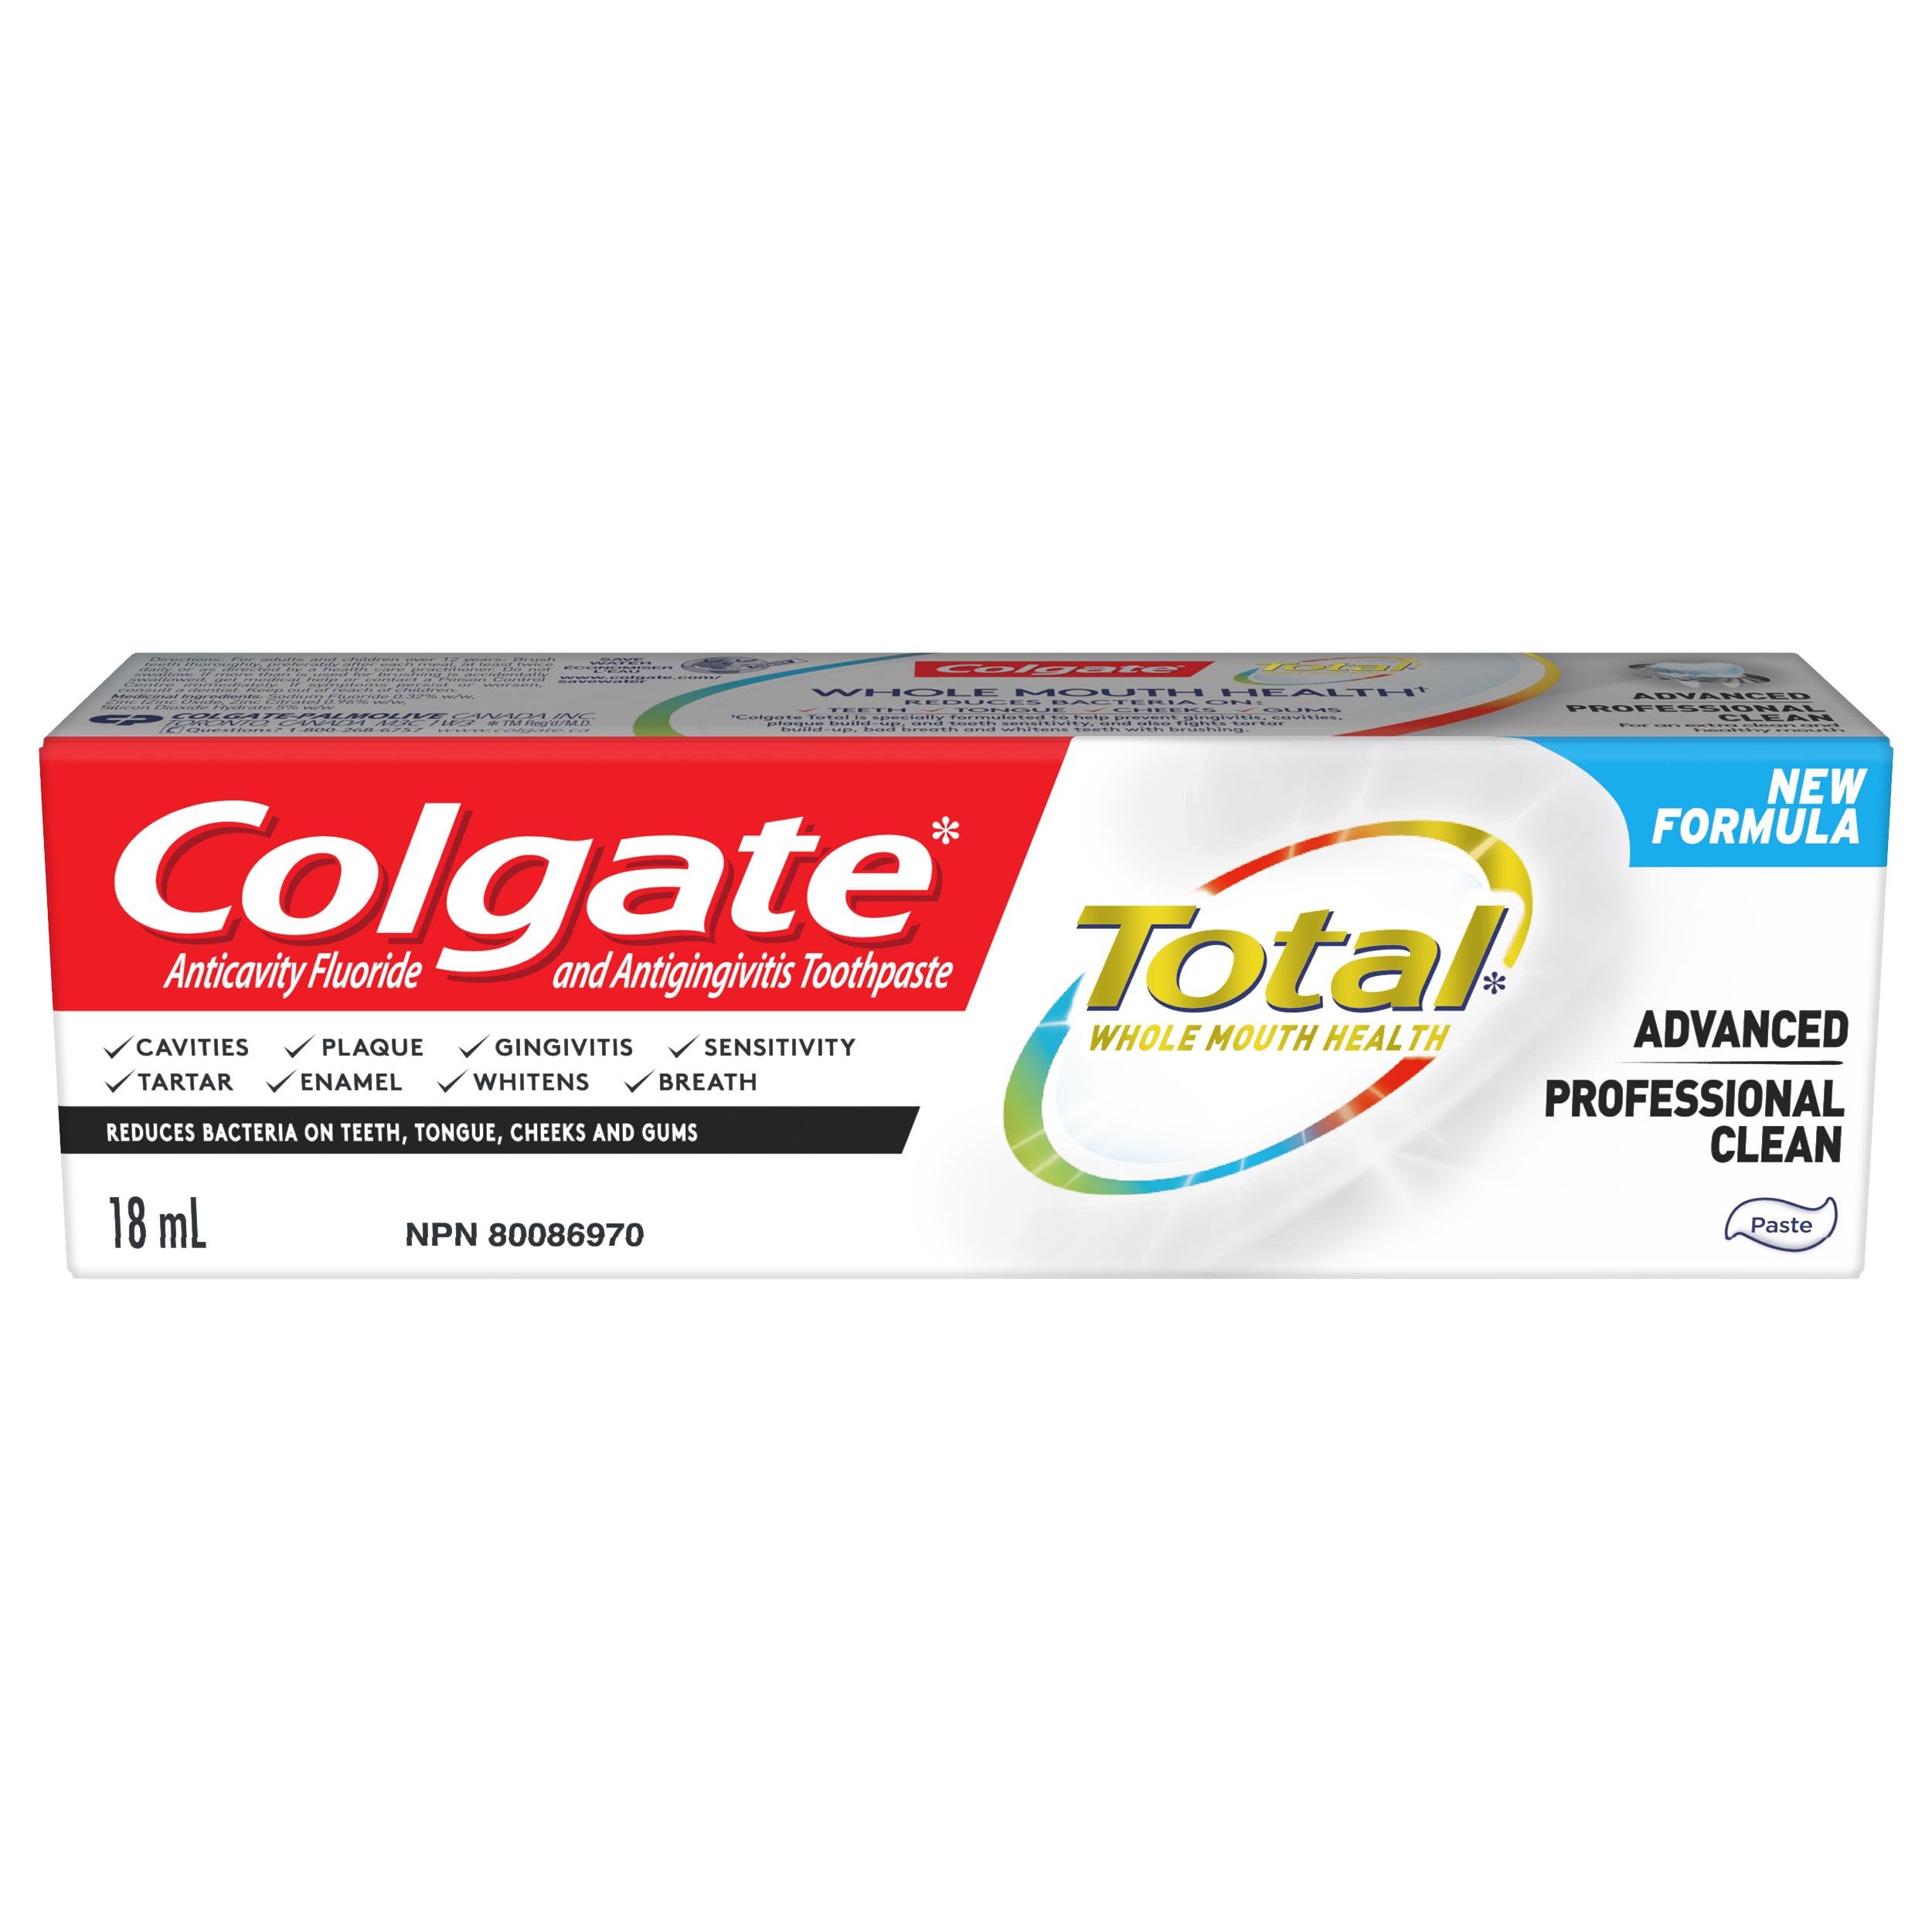 Colgate Total Pro Clean  Toothpaste 18ml 24/cs